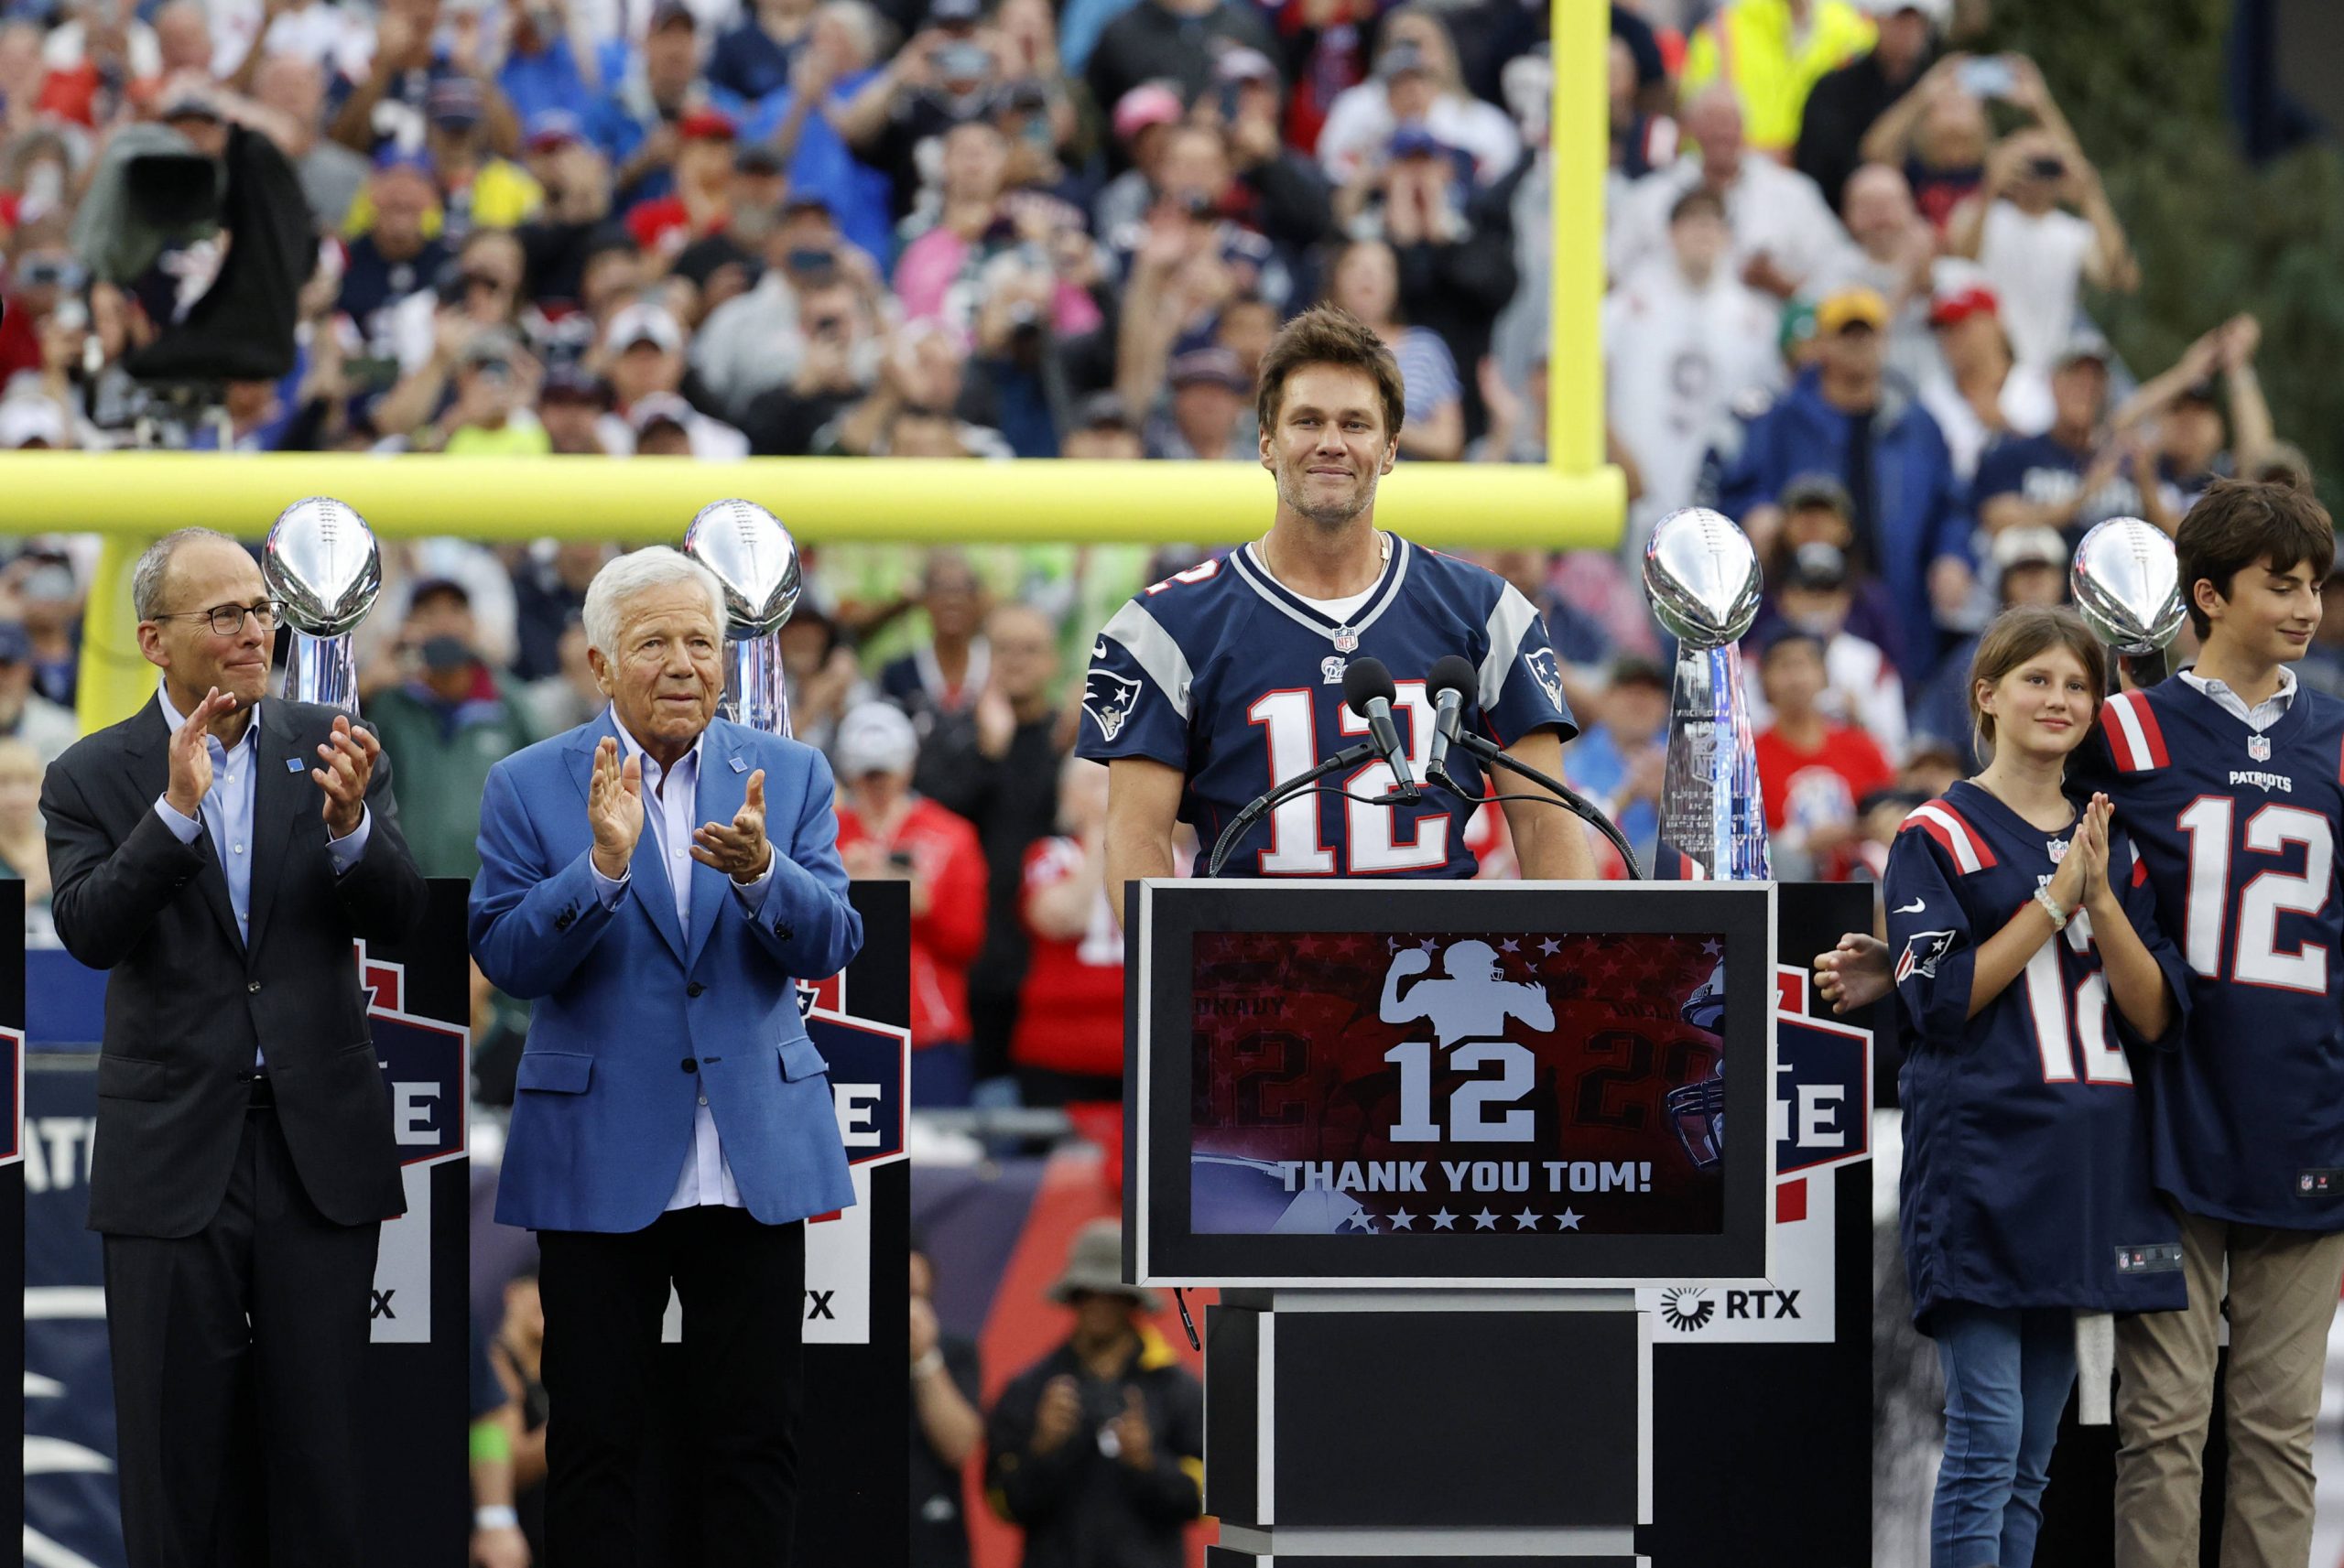 FootballR - NFL - Tom Brady kehrt zu den New England Patriots zurück.